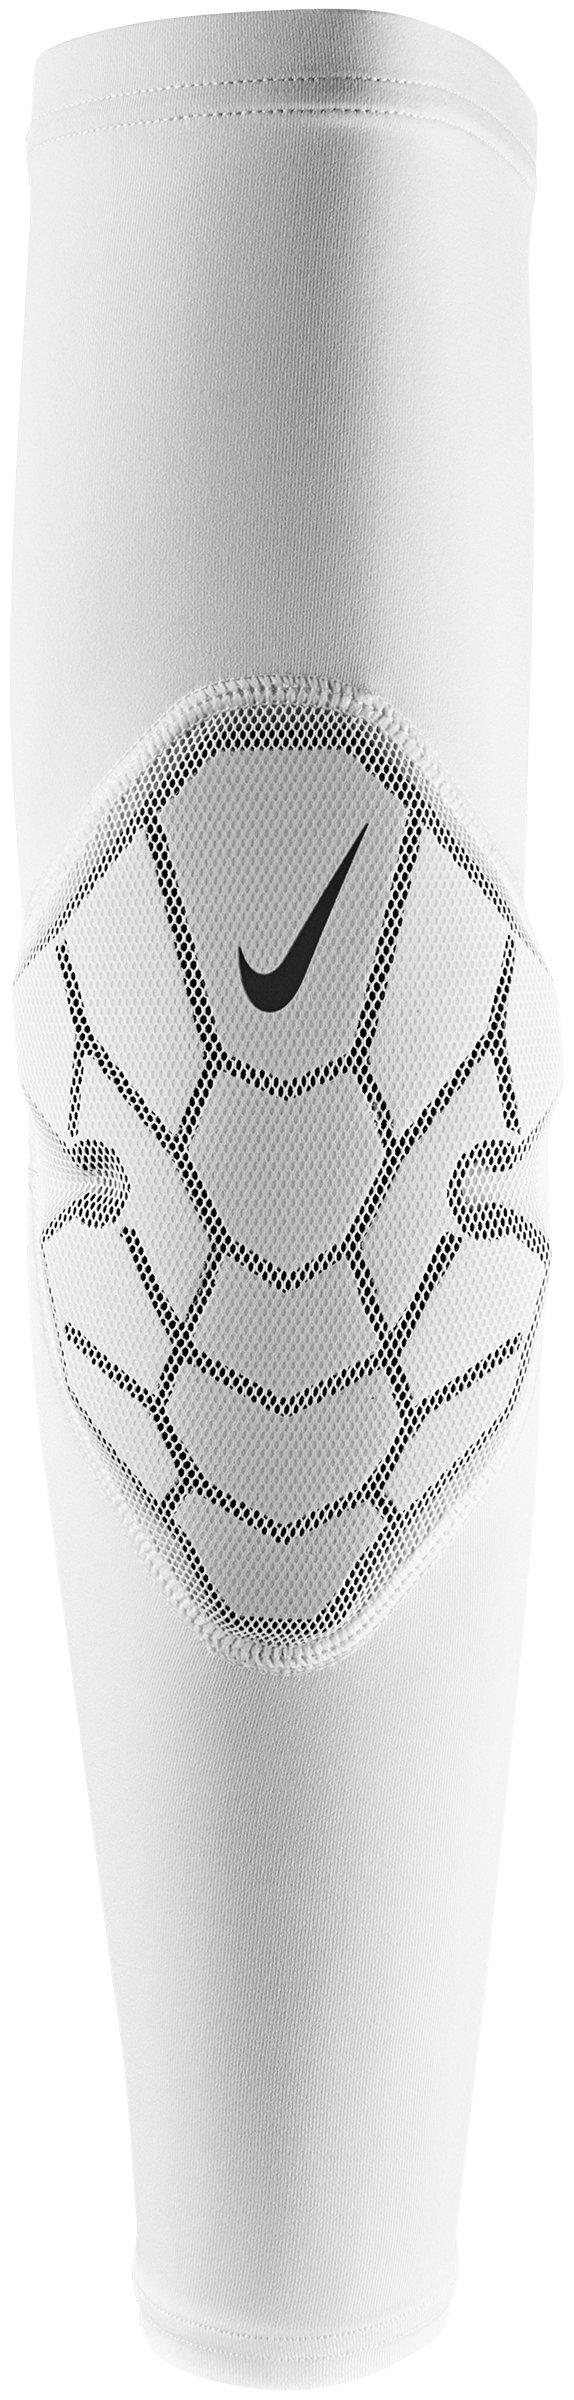 Nike Jordan Padded Shin Sleeves Adult L/XL Black/White New in Box